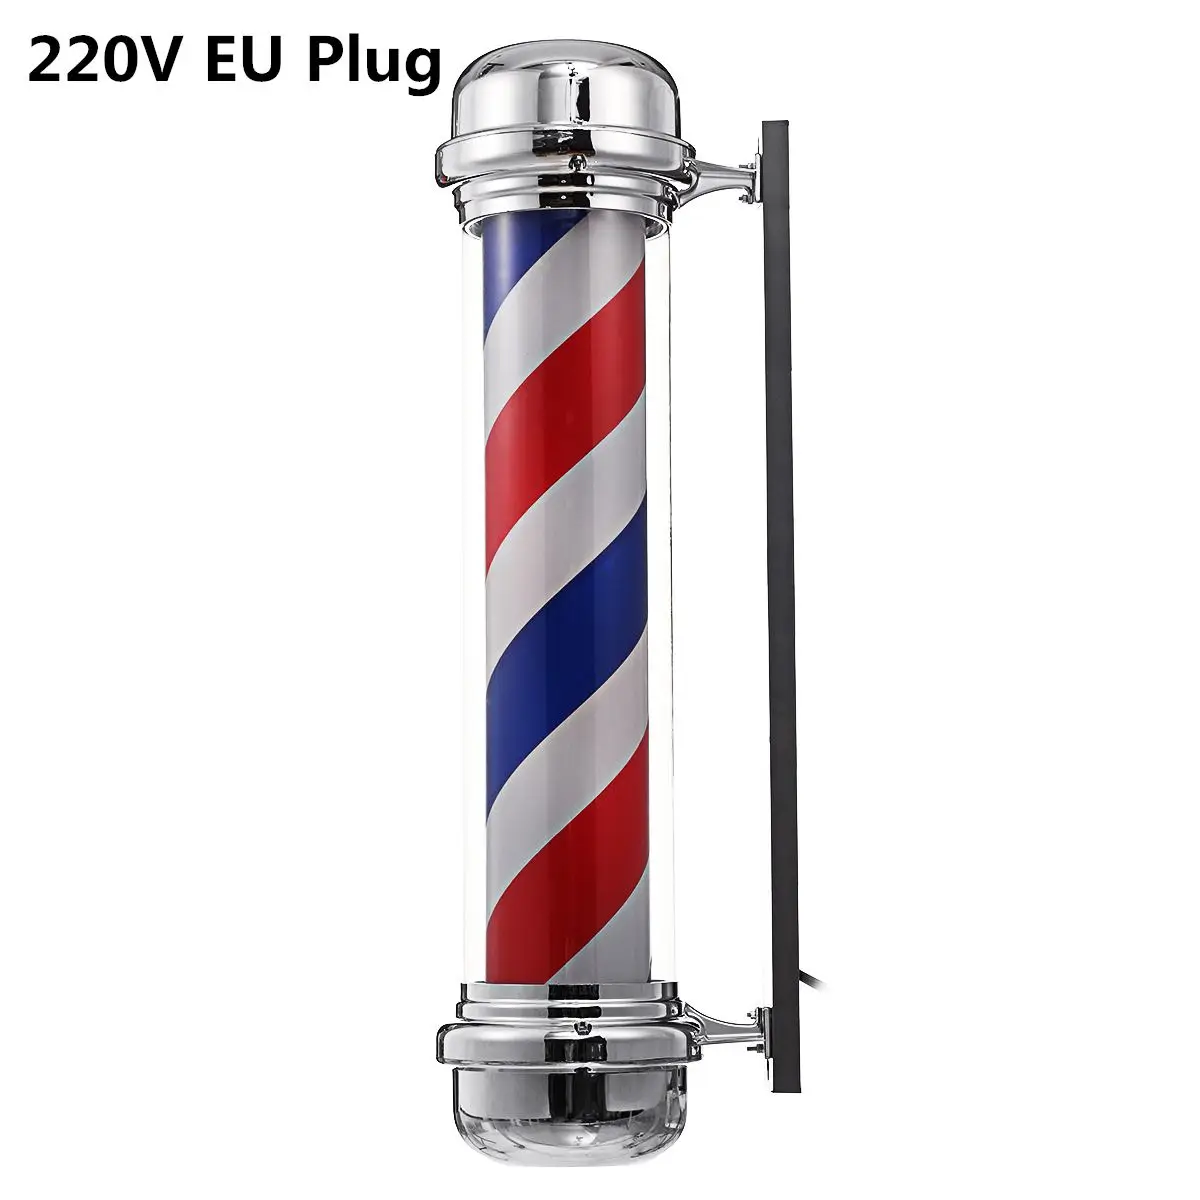 4 Types Barber Shop Light Red White Blue Stripes Rotating LED Light Lamp Hairdressing Salon Outdoor Hanging Sign Lamp - Испускаемый цвет: 220V EU Plug